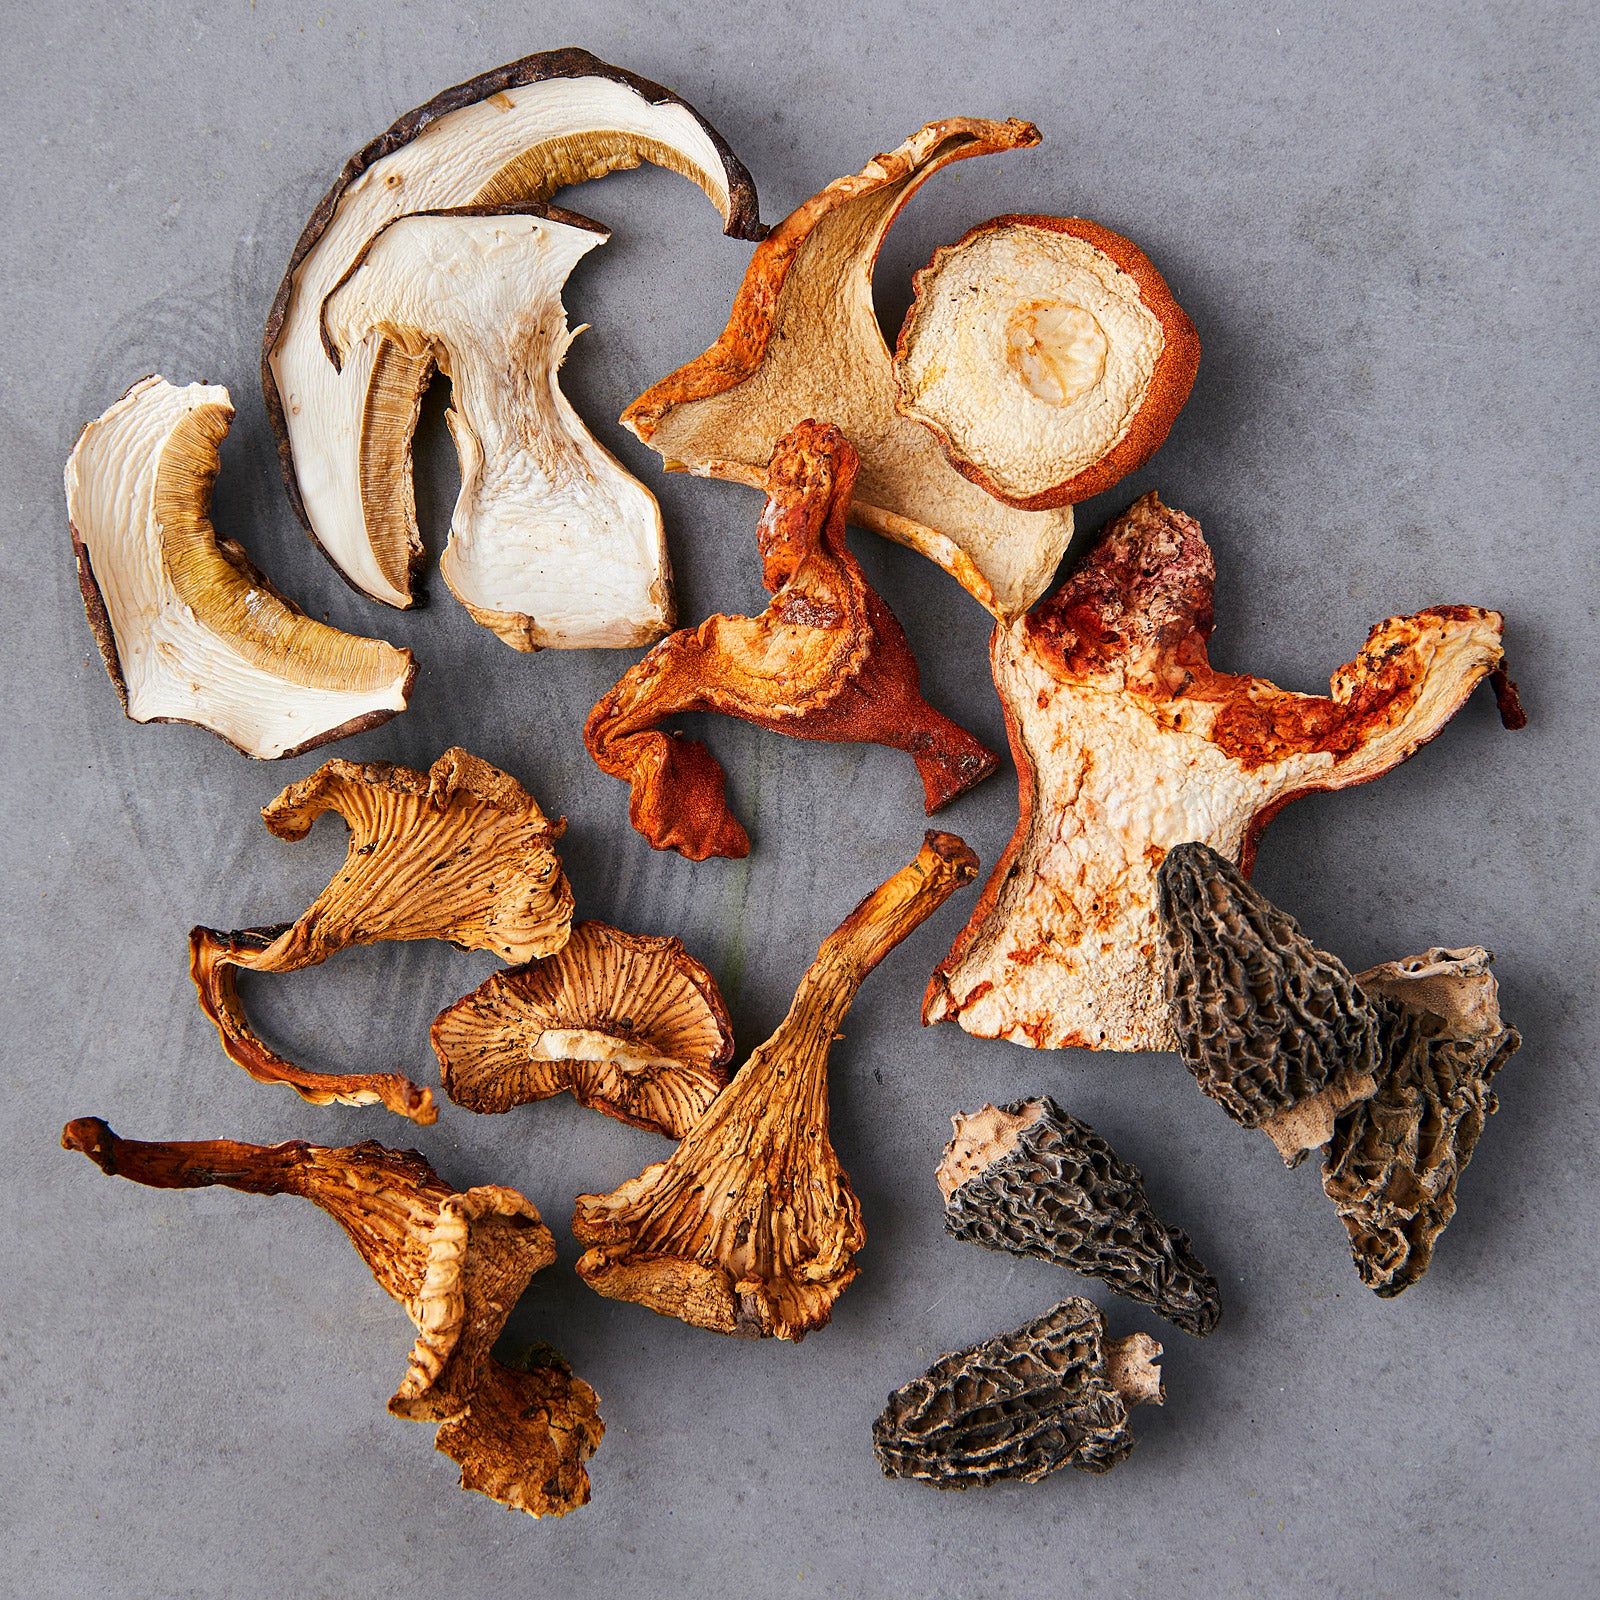 Shop Dried Mushrooms